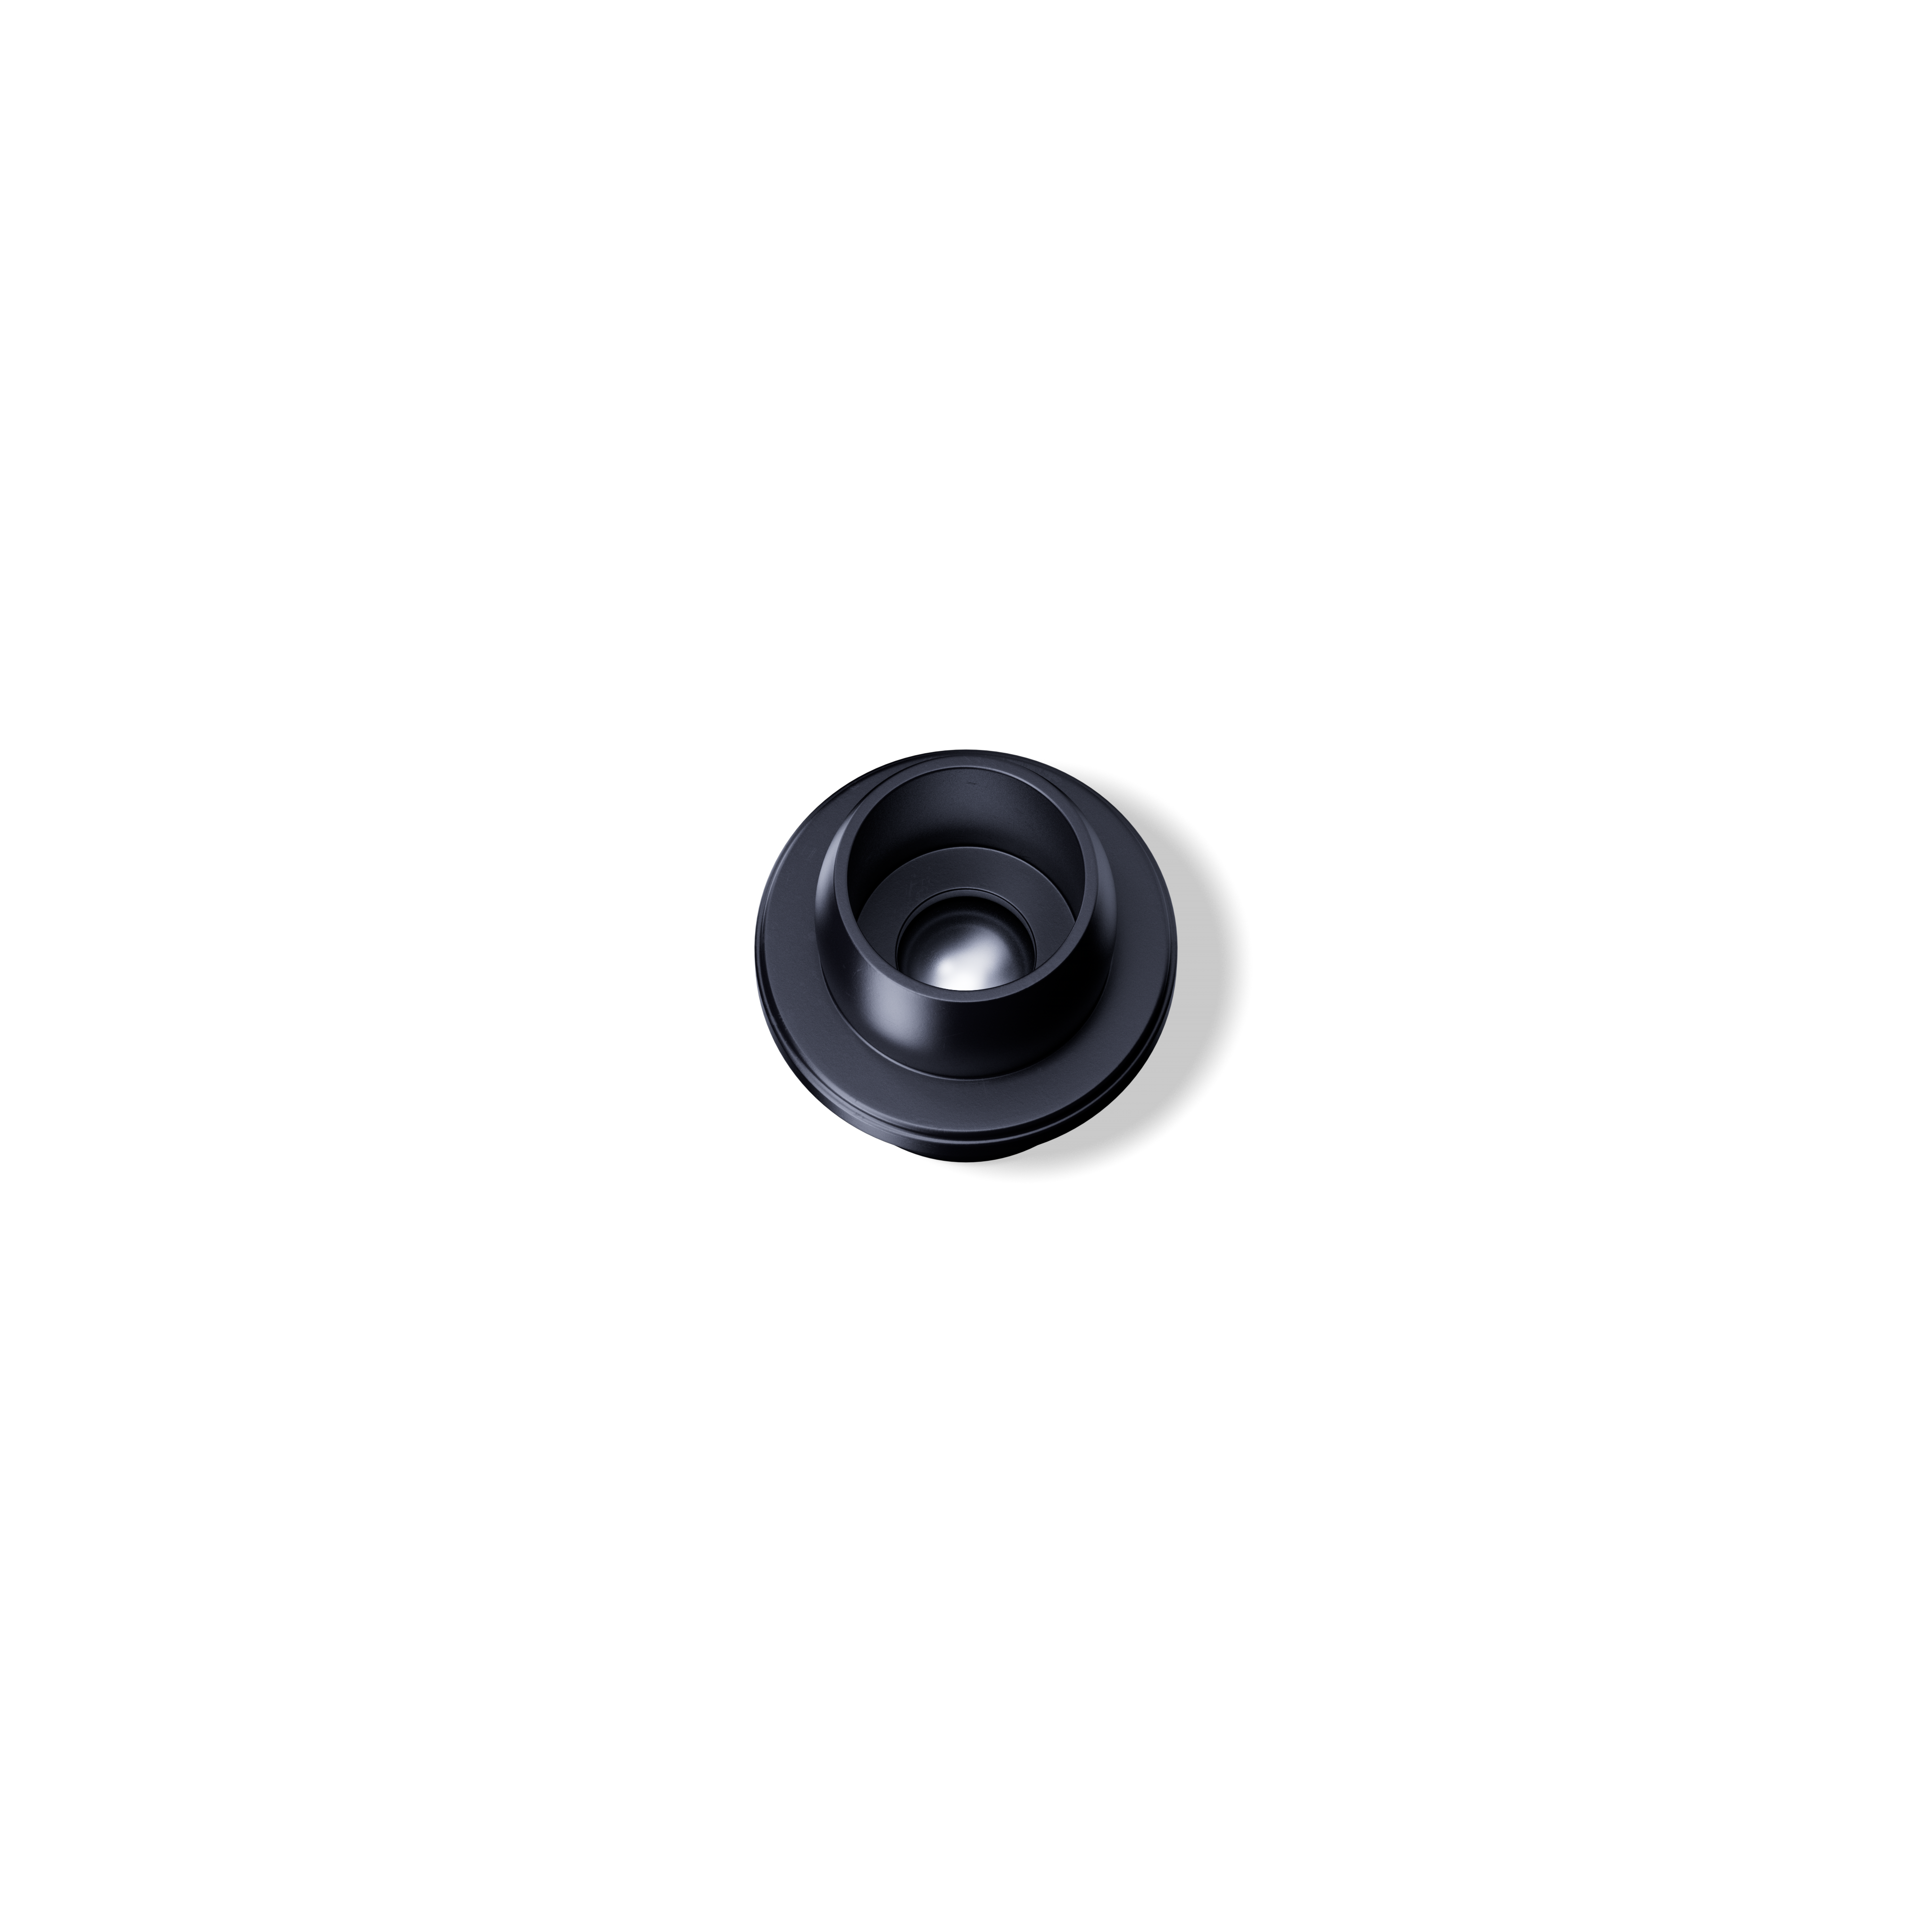 Roll-on cap DIN18, PP, black fitment, stainless steel ball, black cap (Orion)